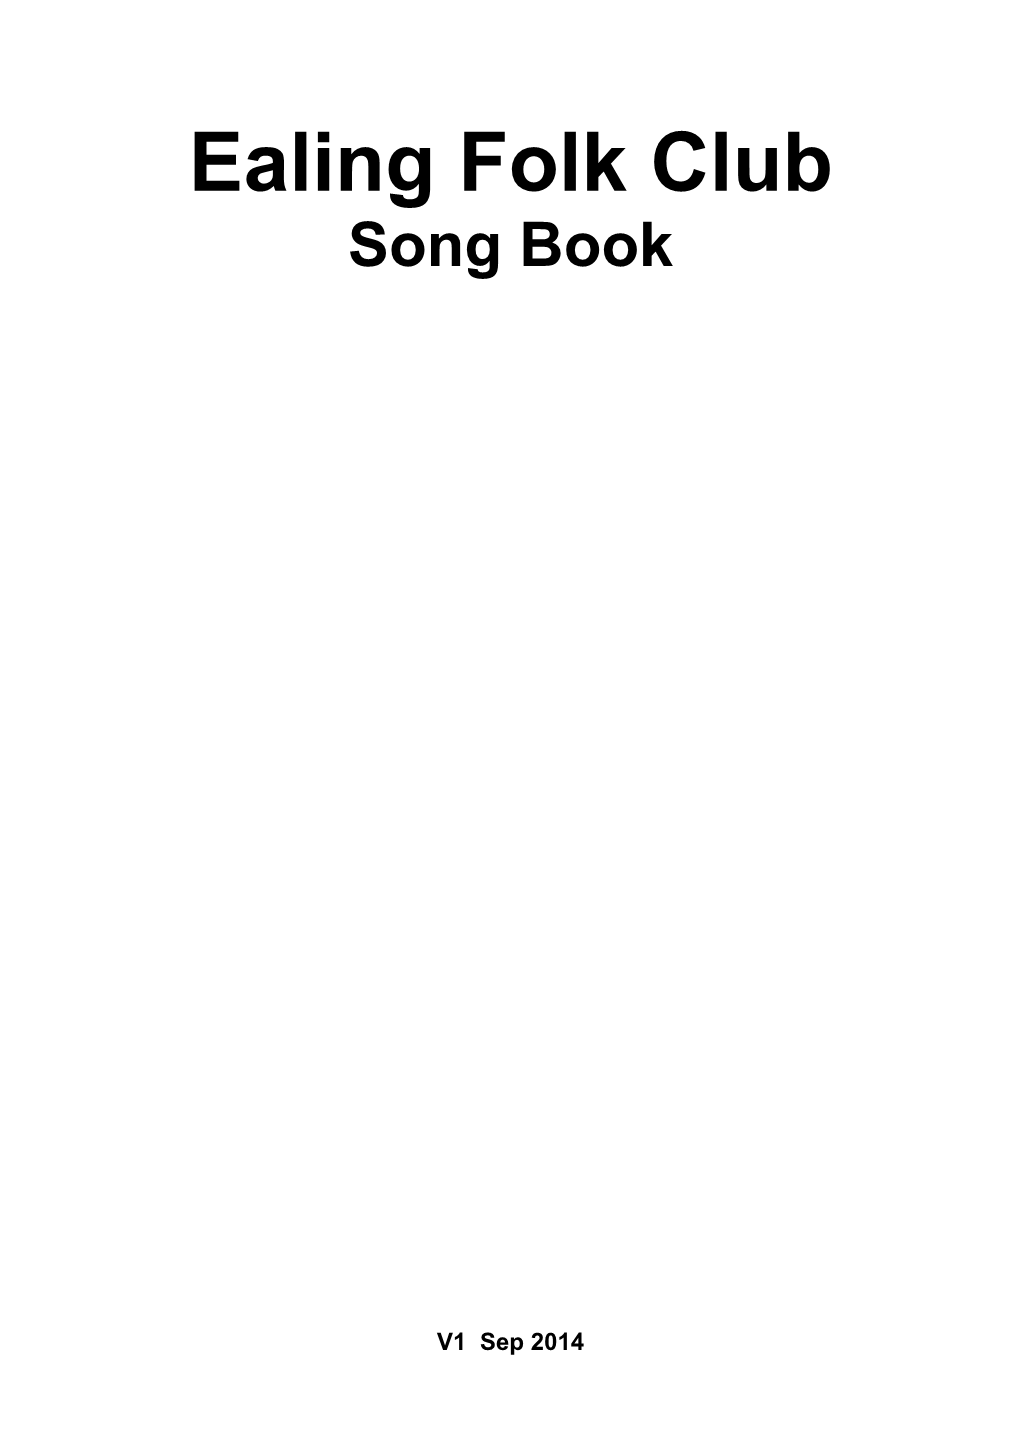 Ealing Folk Club Song Book V1